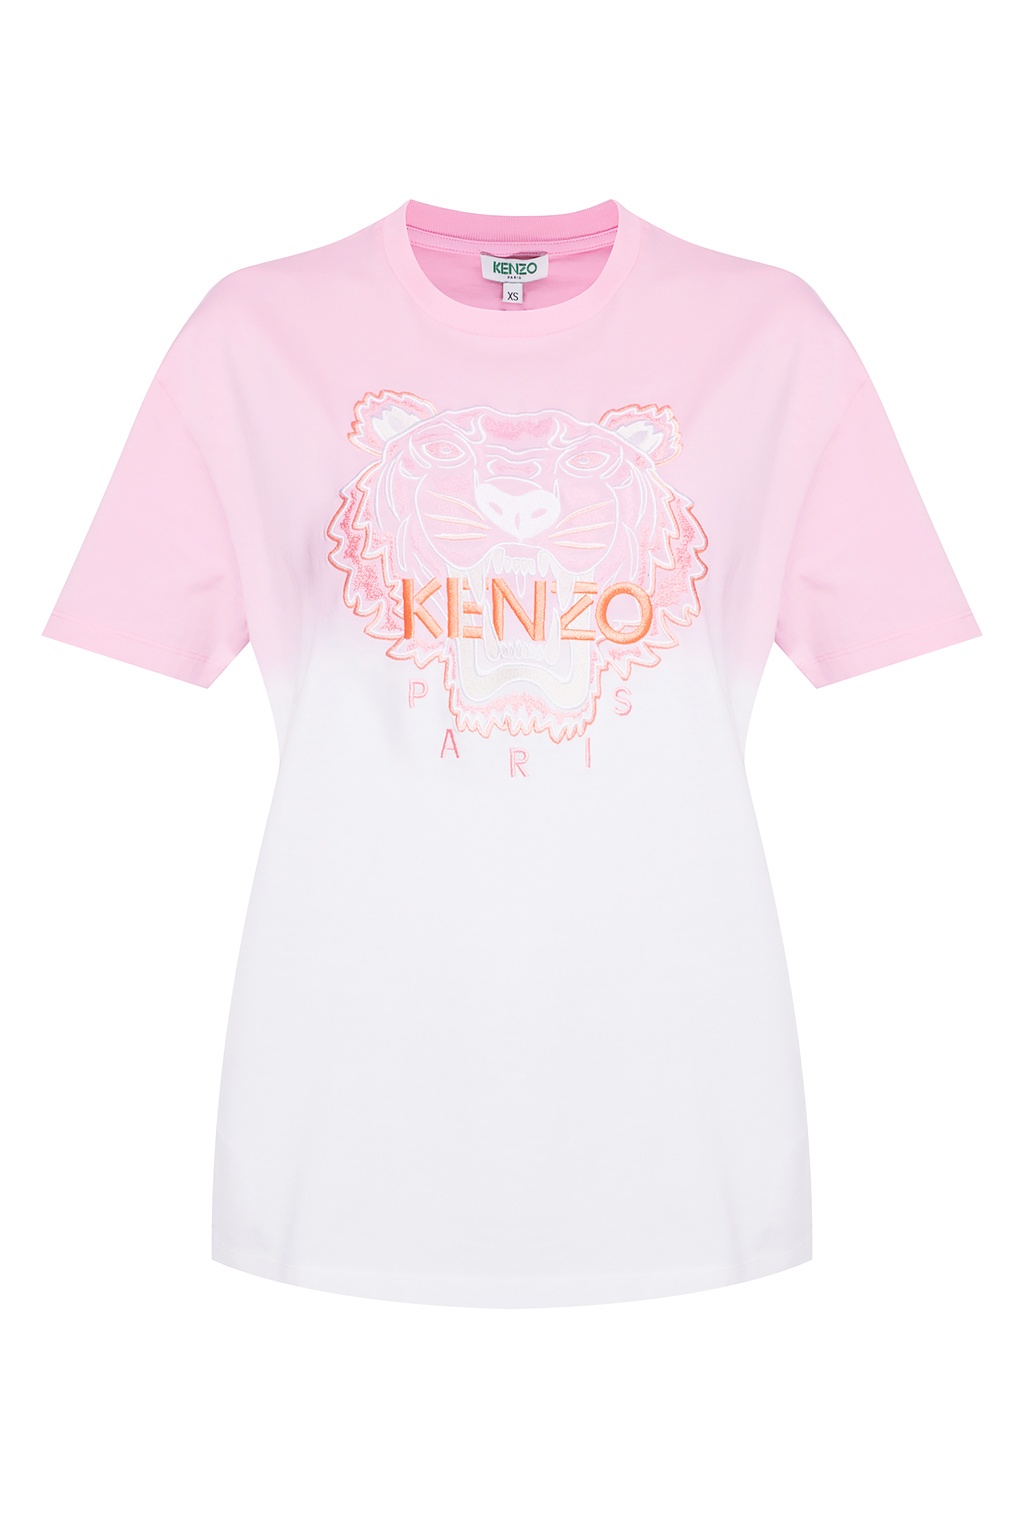 kenzo tiger head t shirt